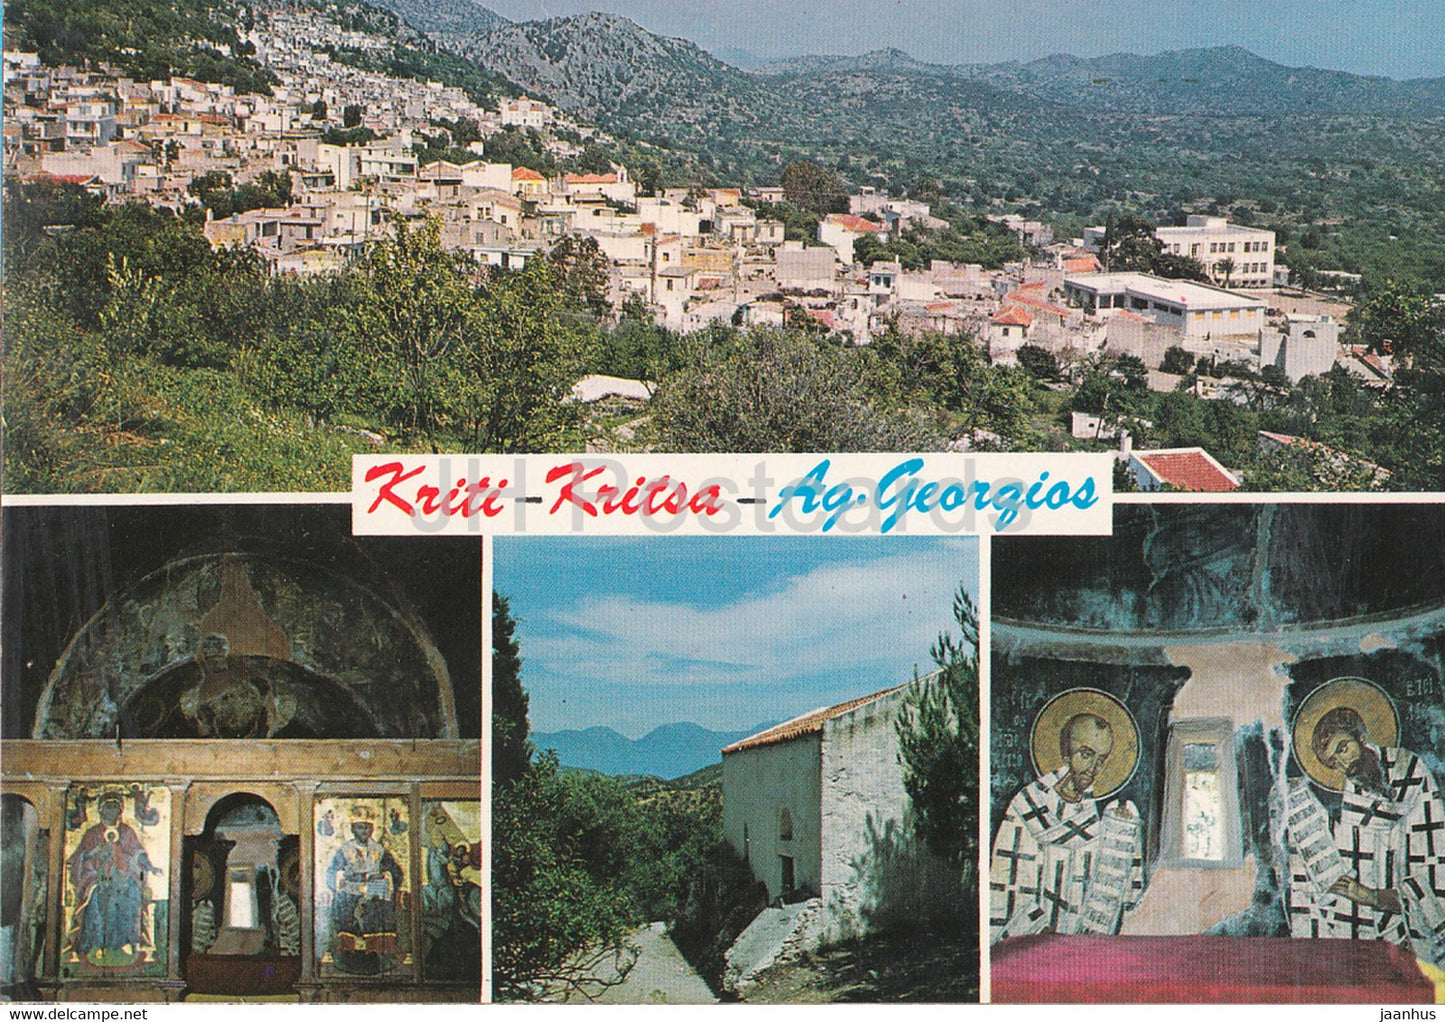 Crete - Critsa - Agios Georgios - multiview - Greece - unused - JH Postcards